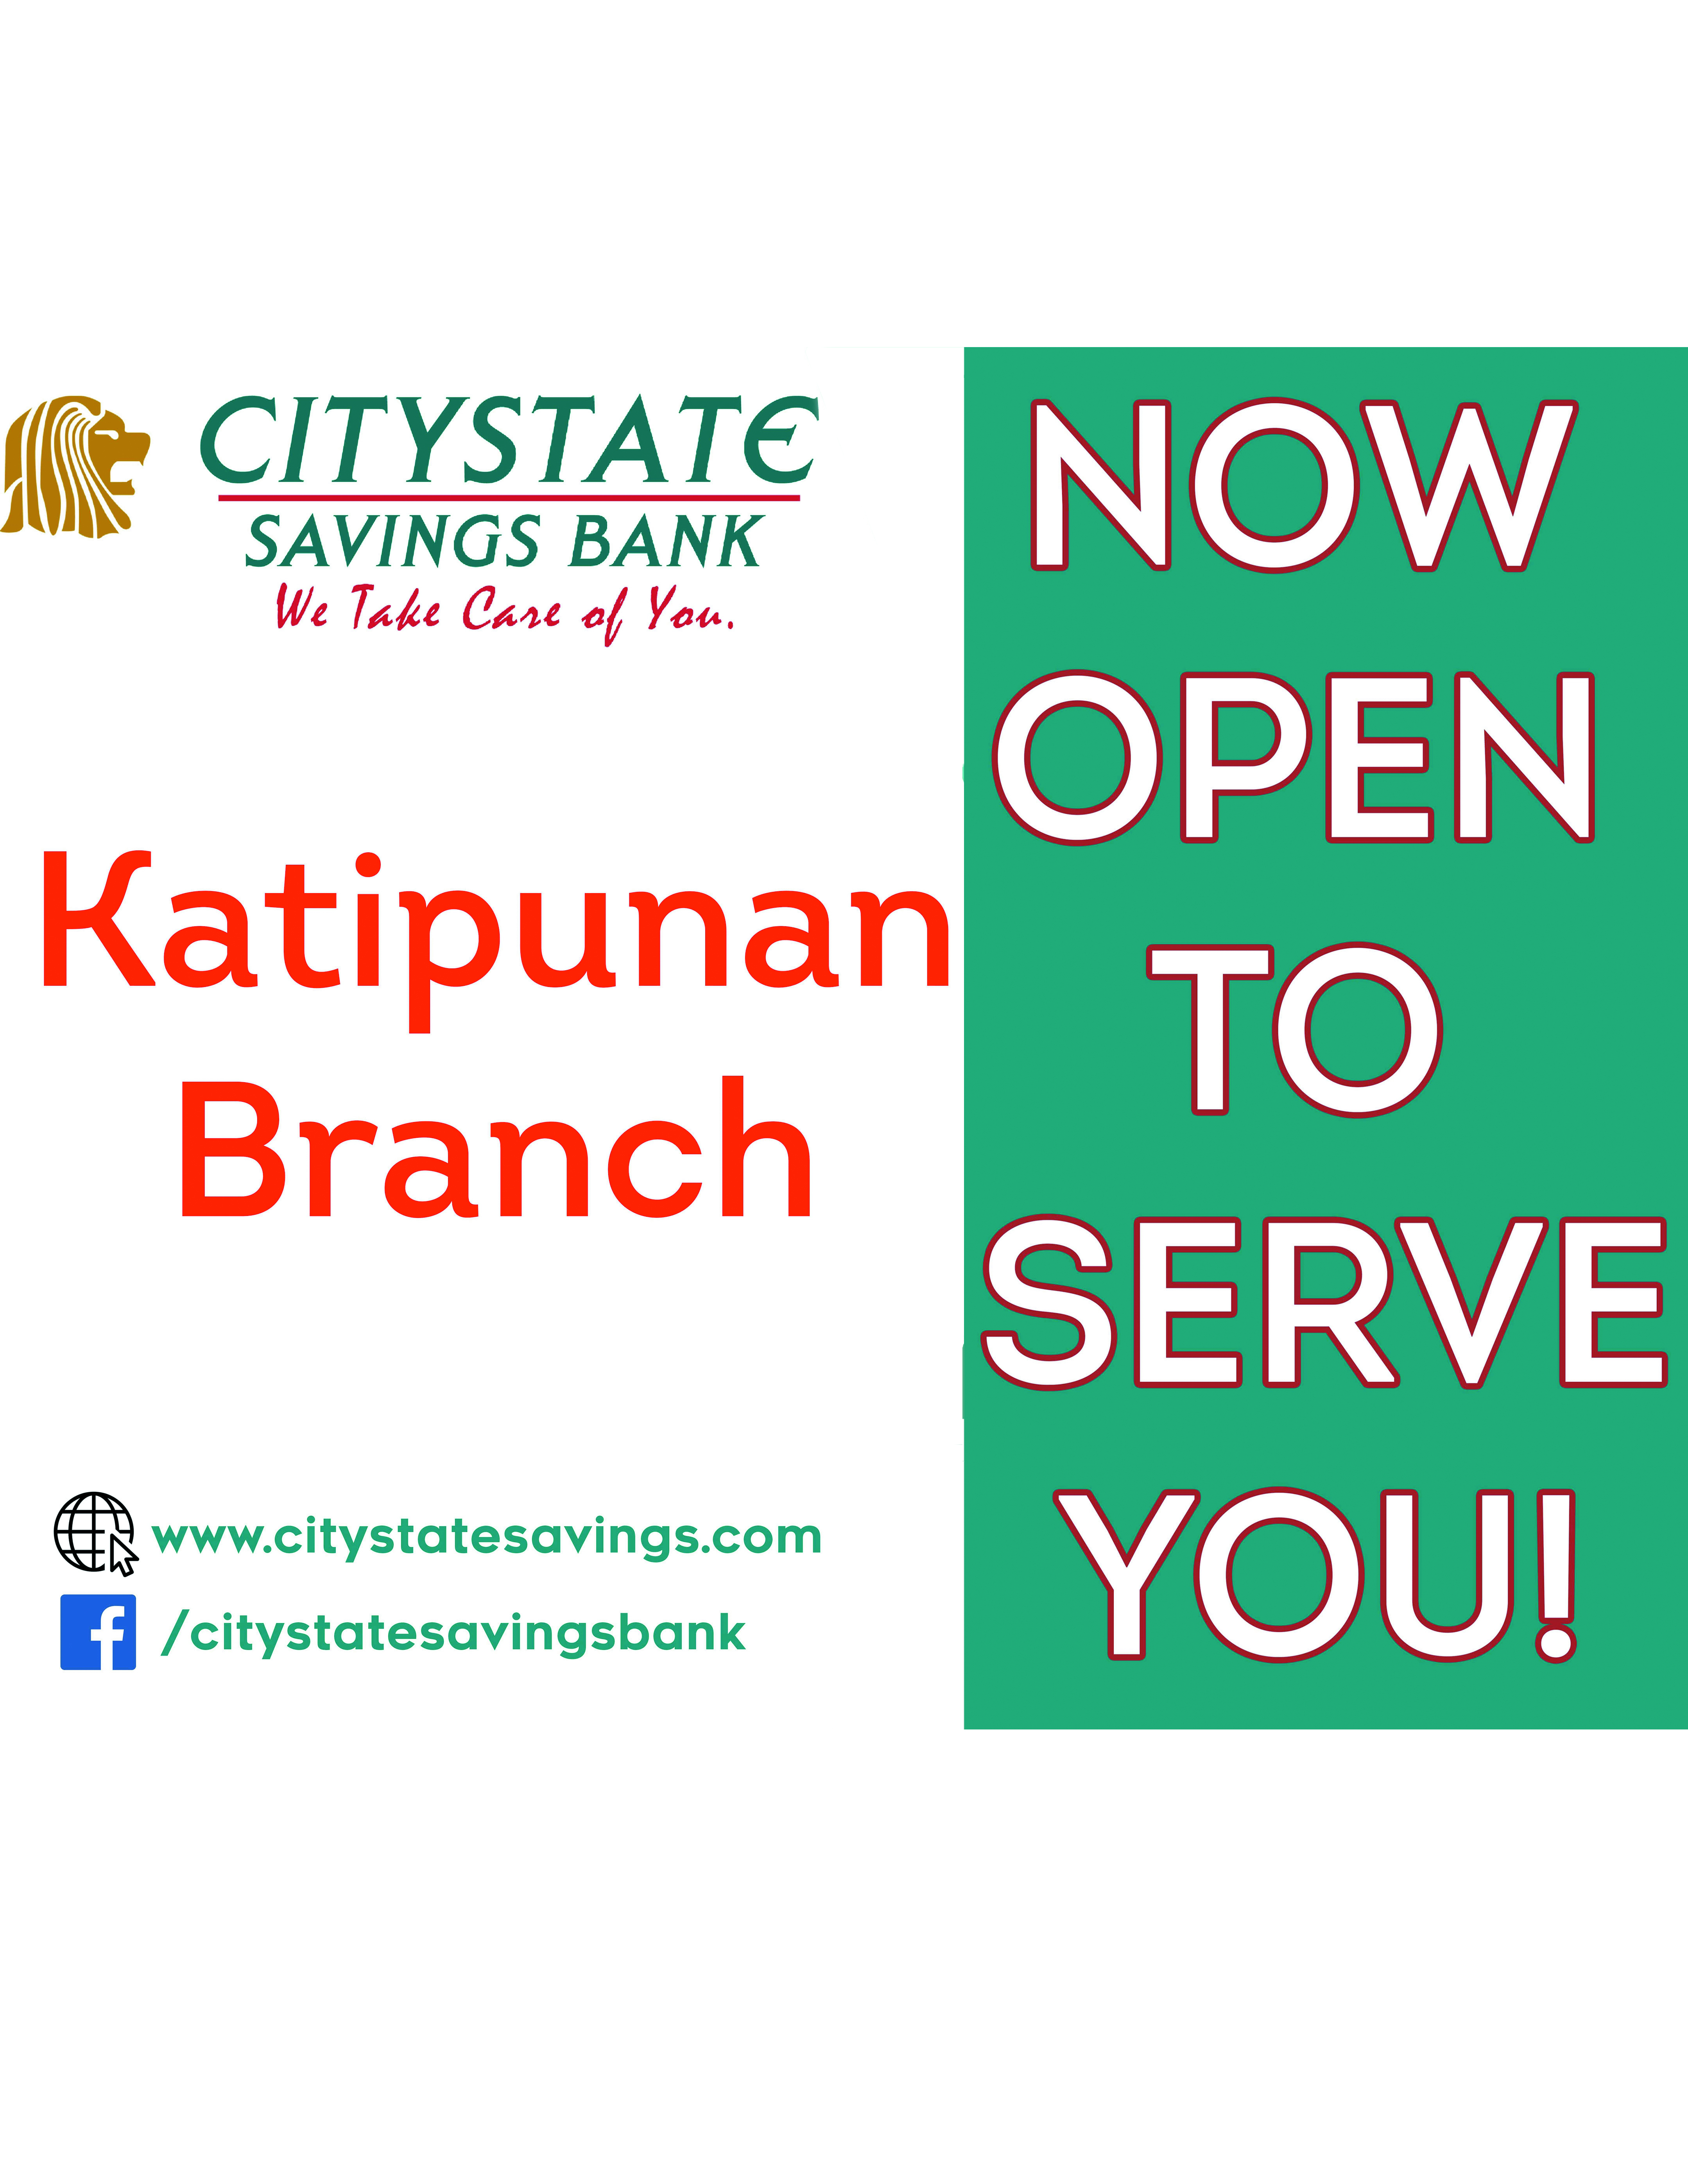 Katipunan Branch is now open